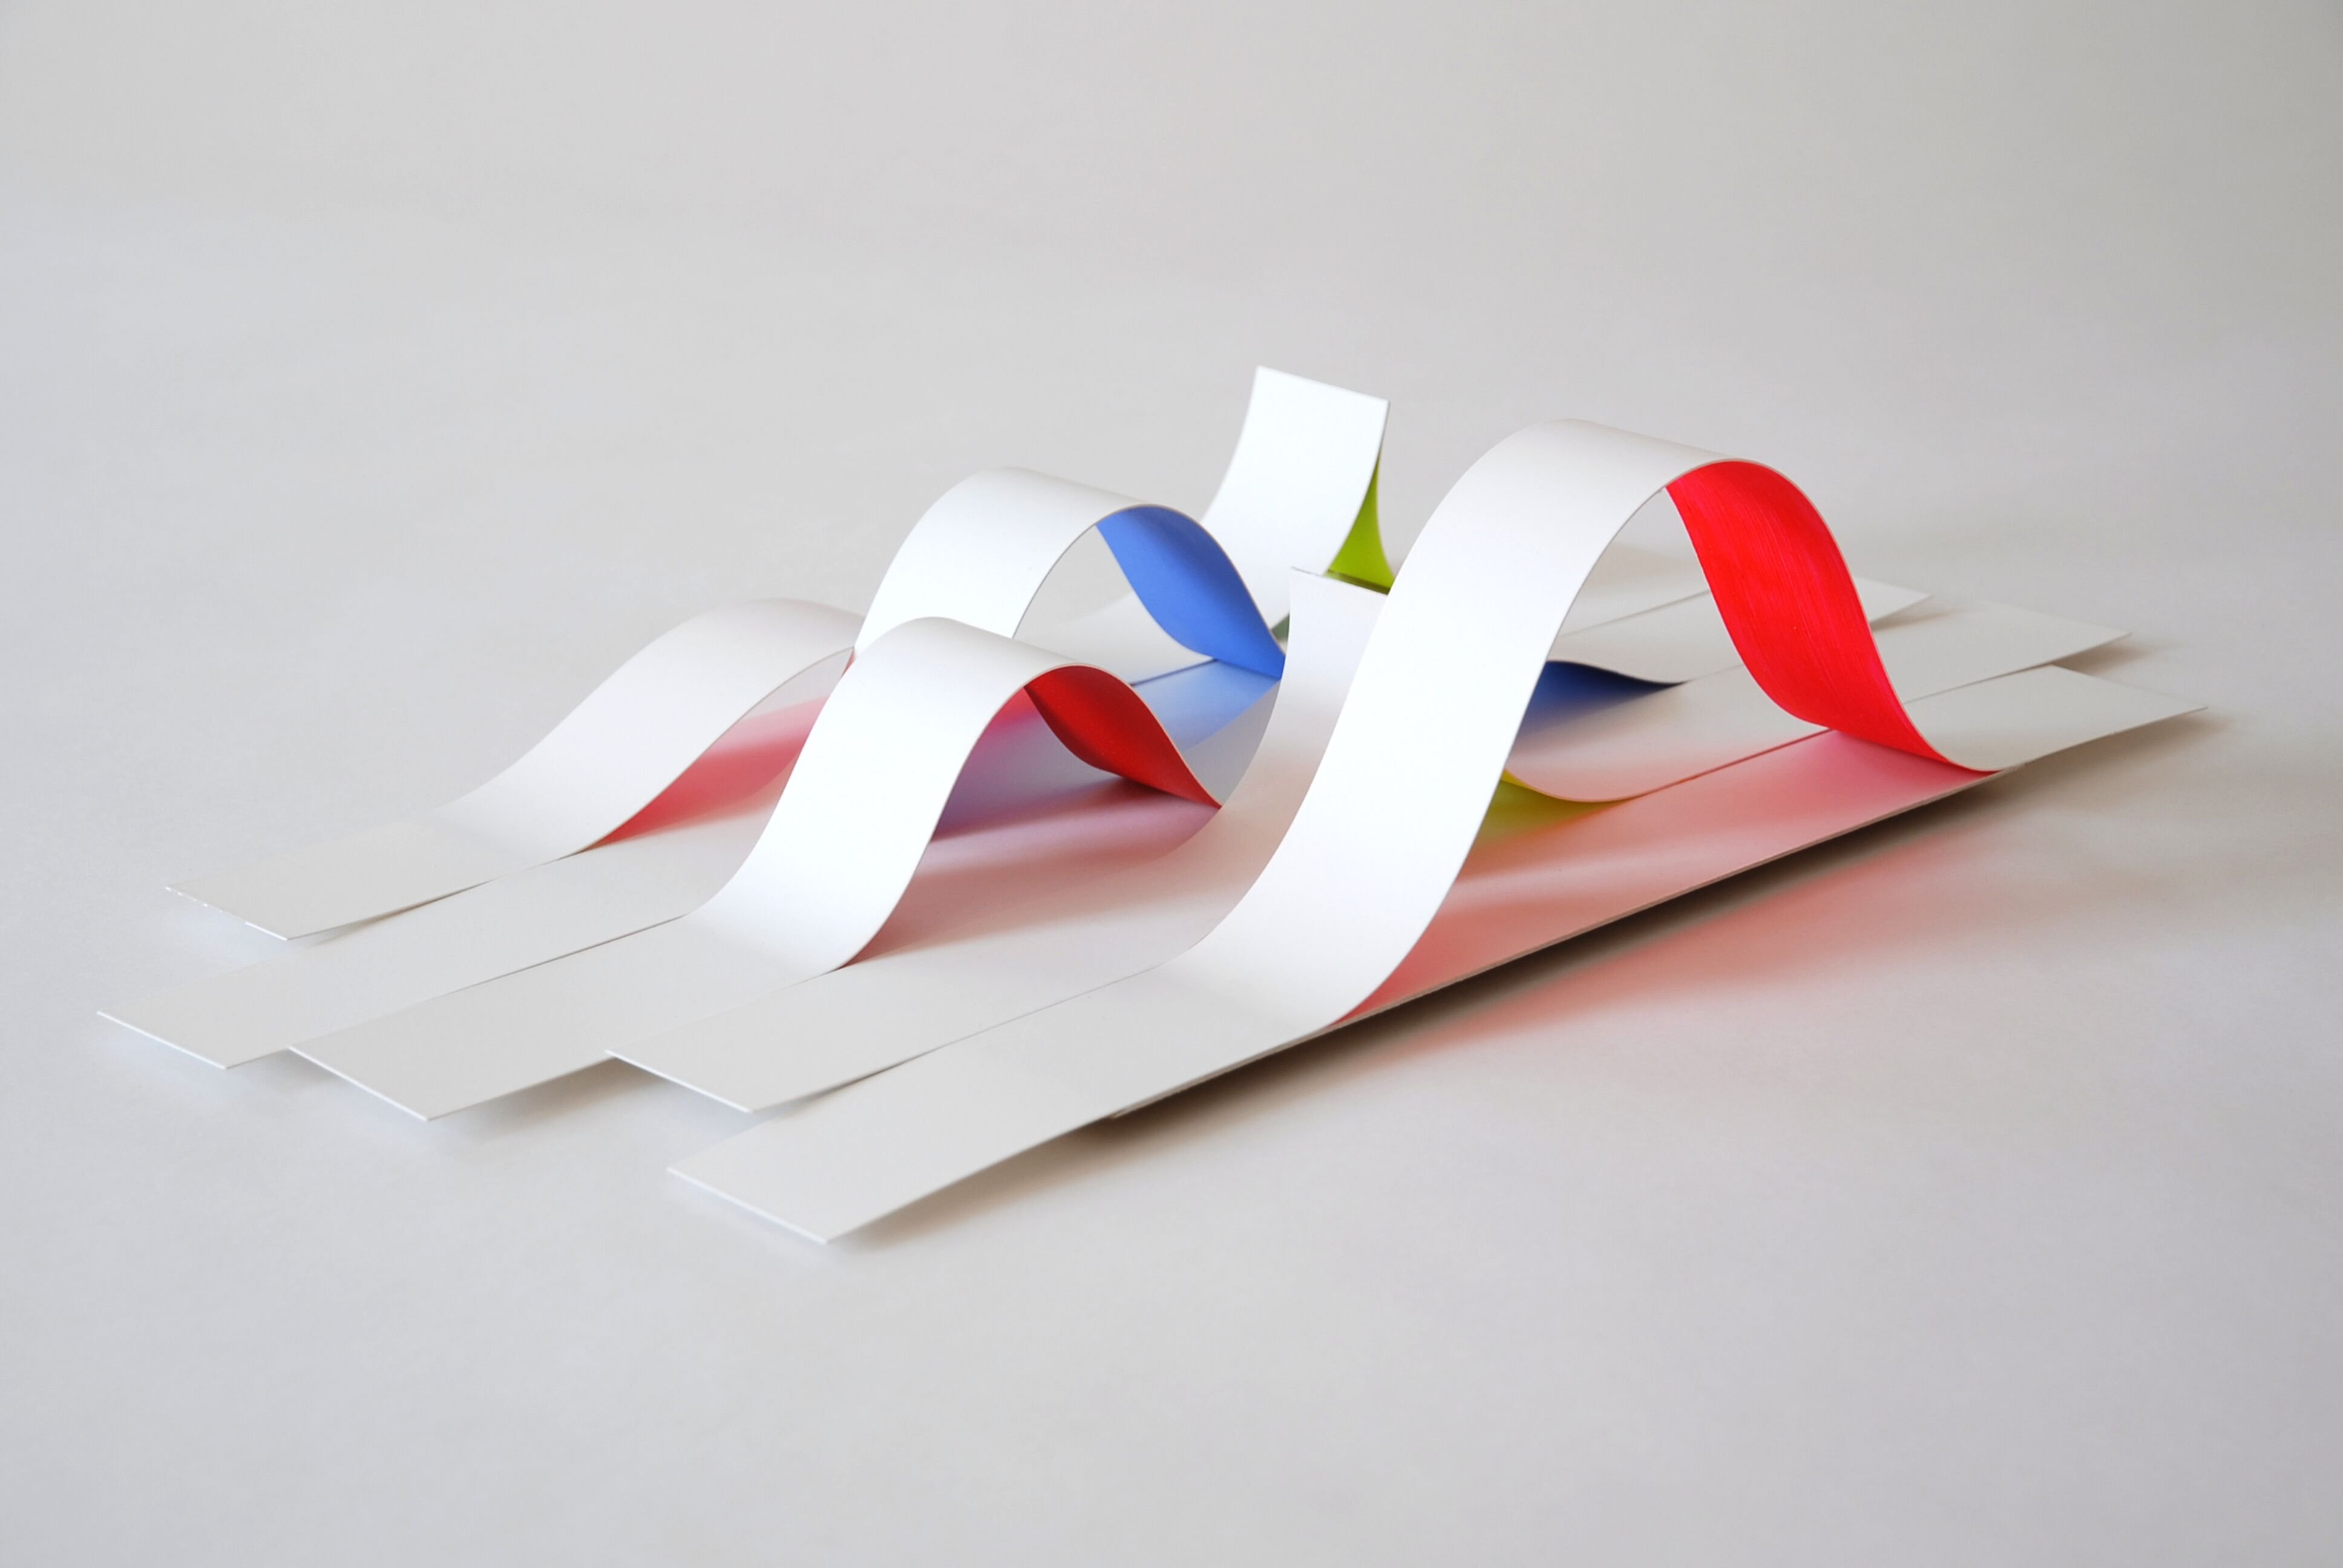 Alexander Lorenz, "FF1", Holz, Kunststoff, Licht, Kunstharz, 2015, 26 x 53 x 5 cm